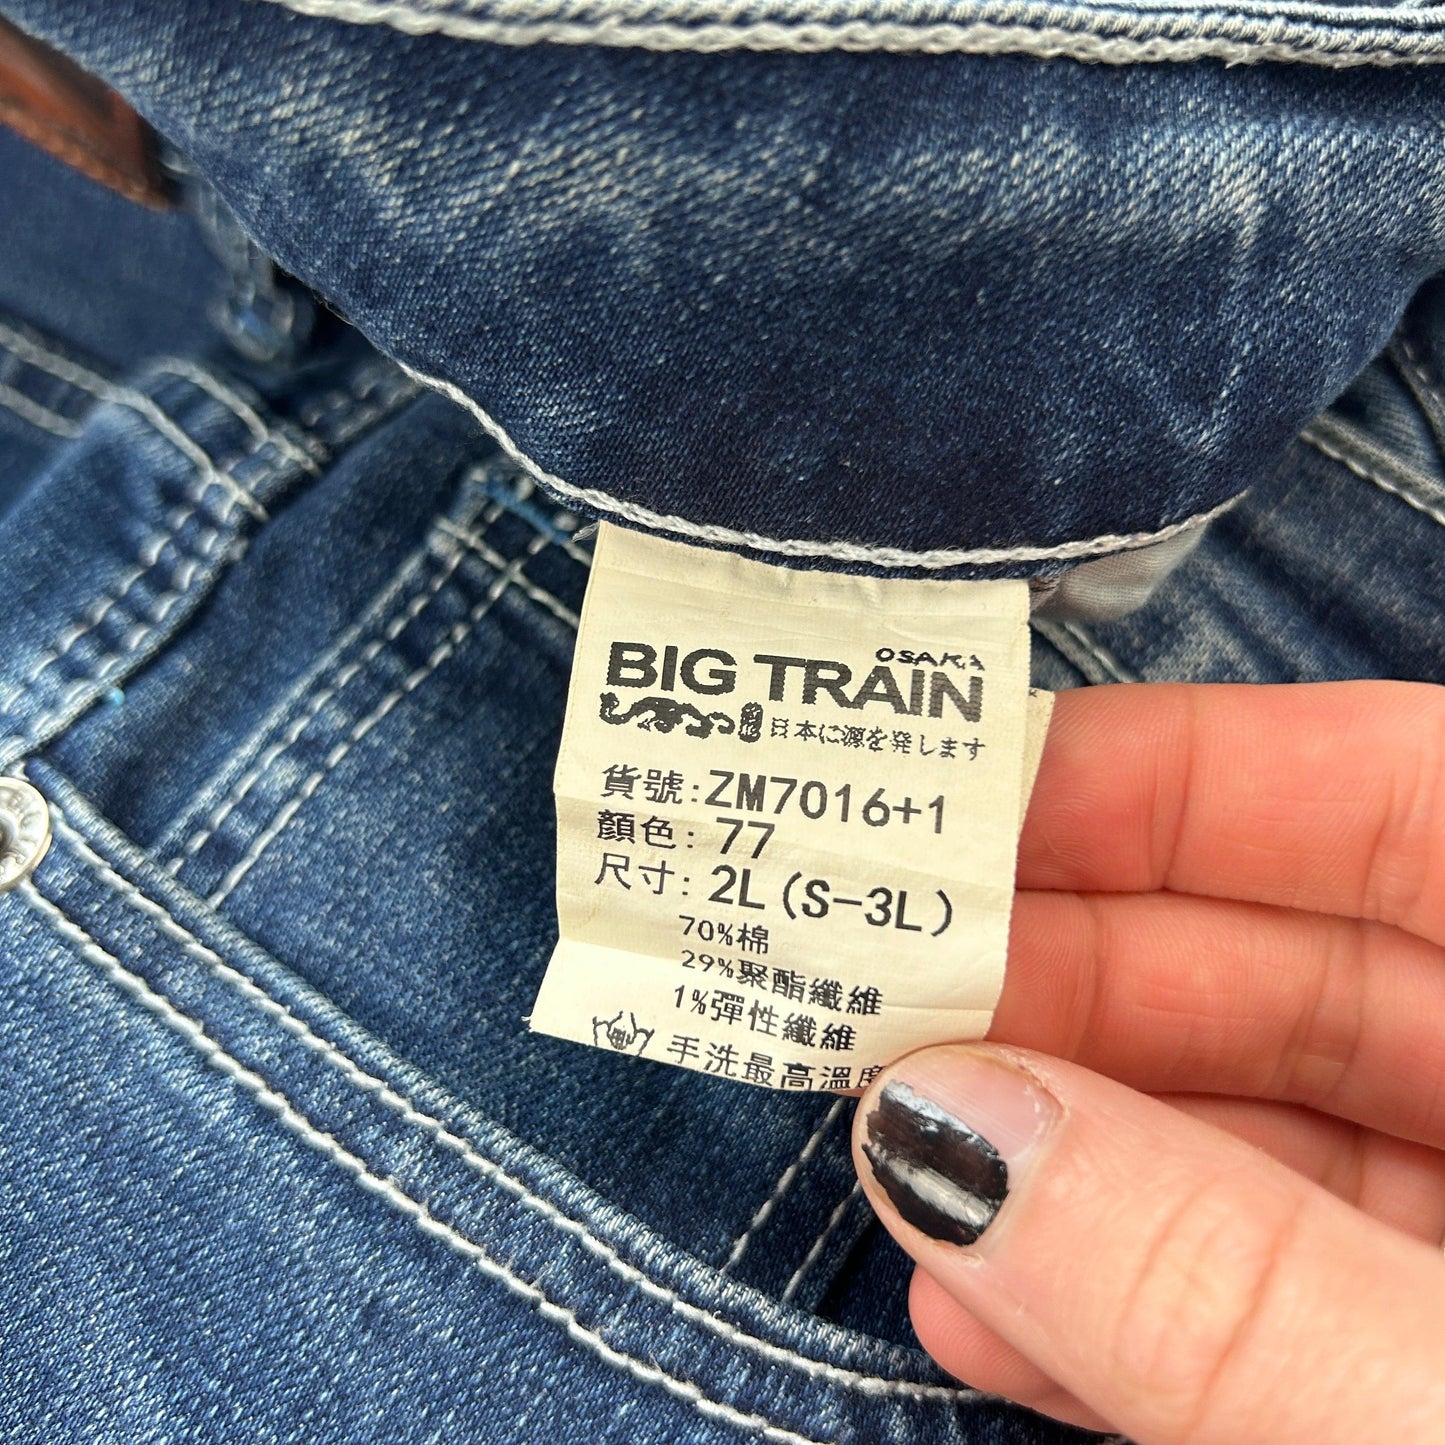 Vintage Monster Big Train Japanese Denim Jeans Size W34 - Known Source